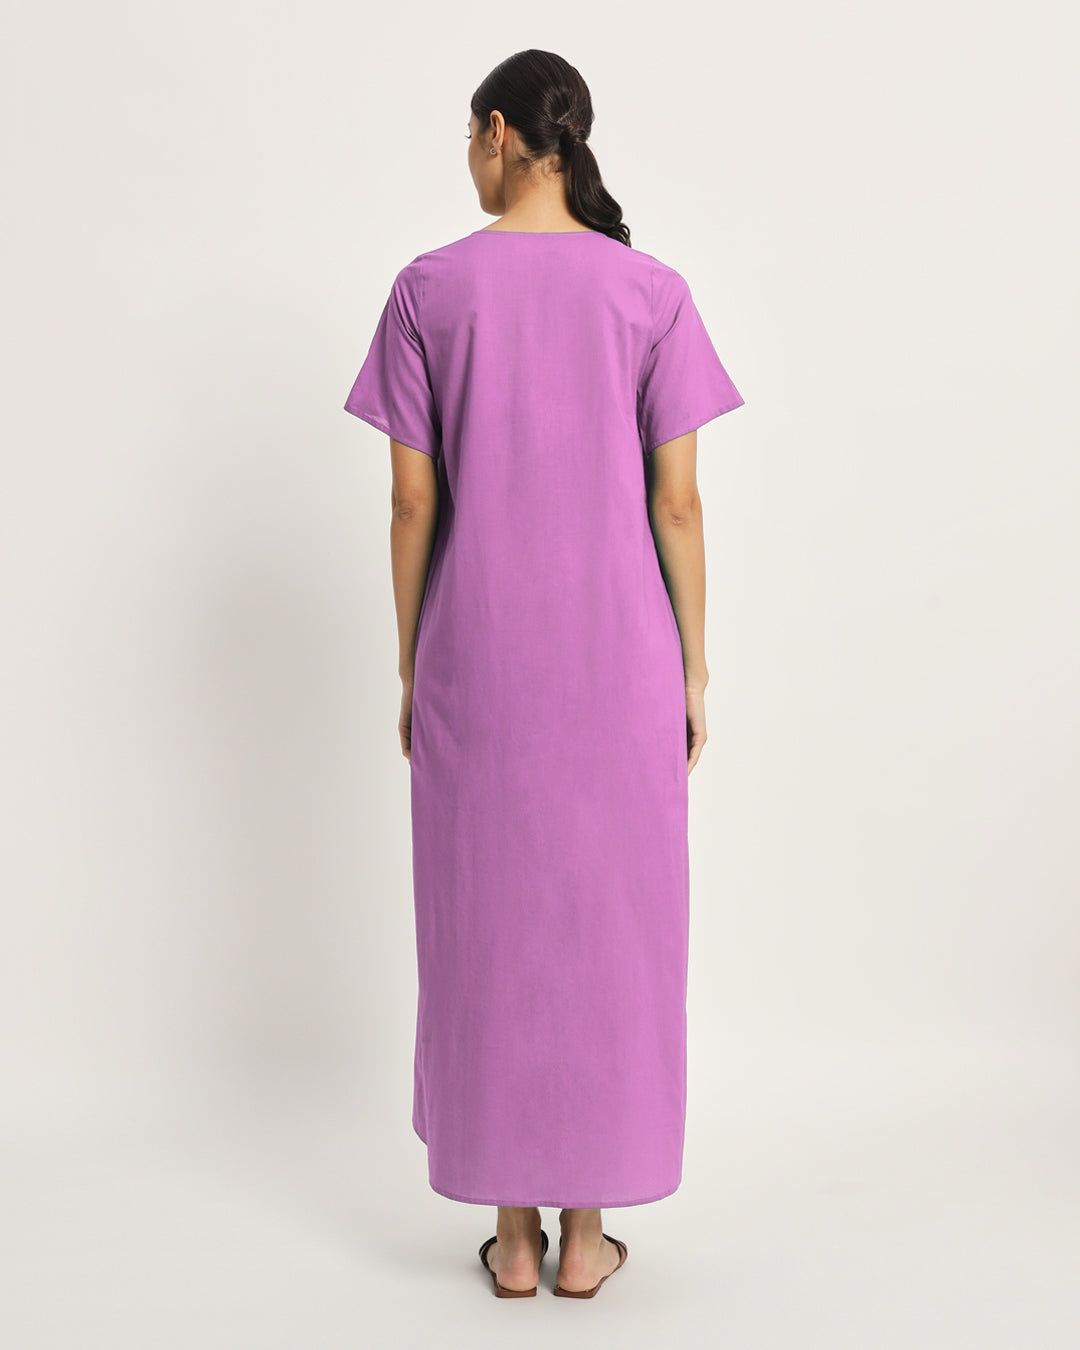 Combo: Black & Wisteria Purple Nurture N' Shine Maternity & Nursing Dress